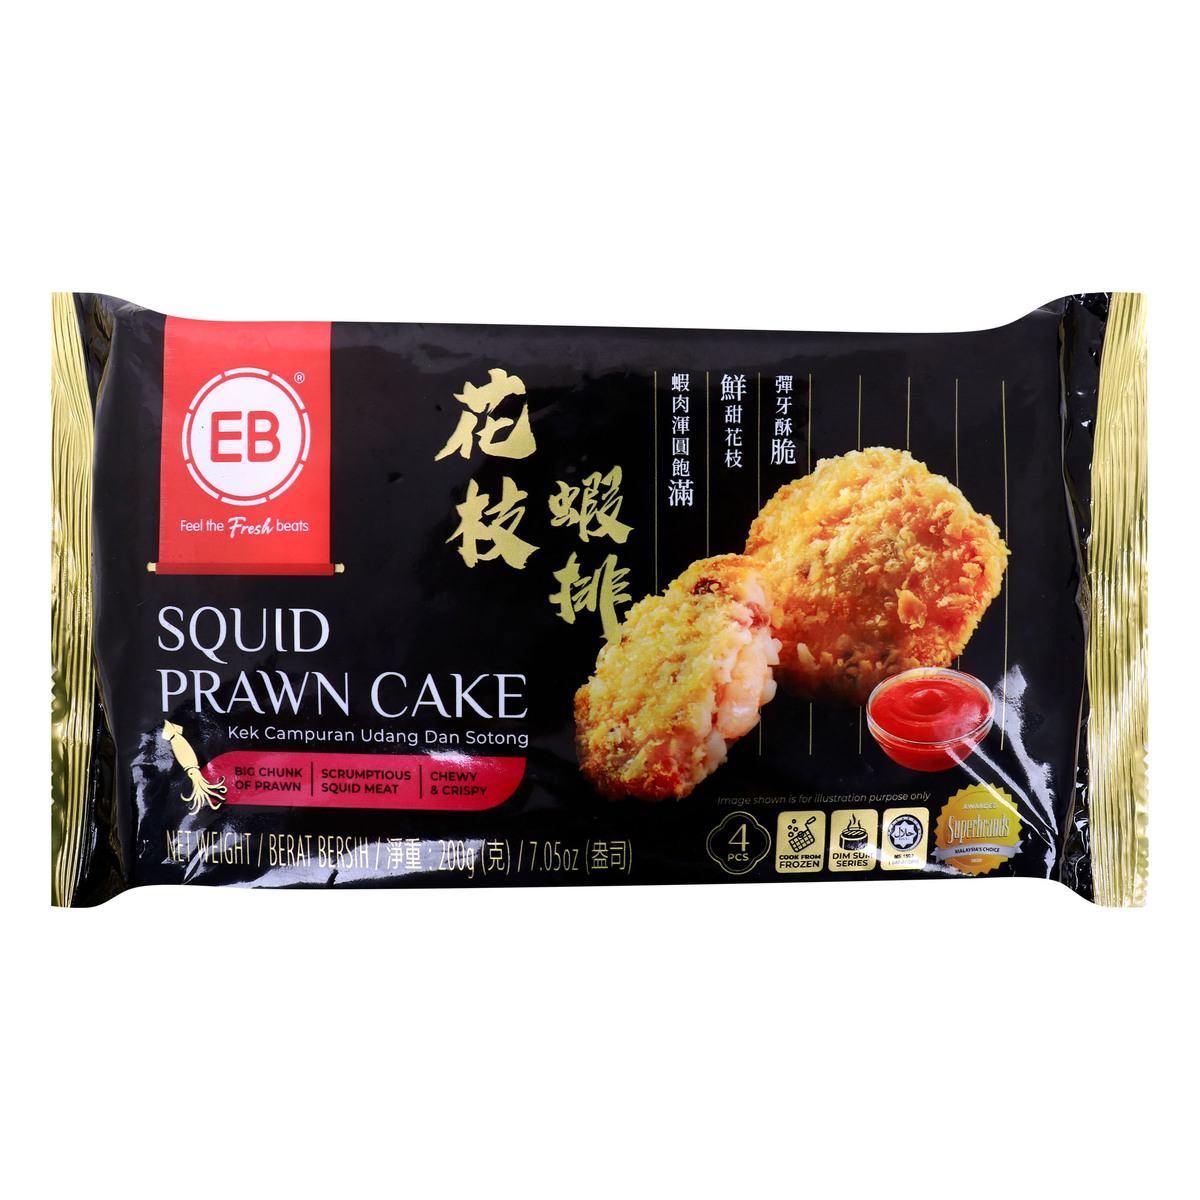 EB Frozen Squid Prawn Cake 4 pcs 200 g